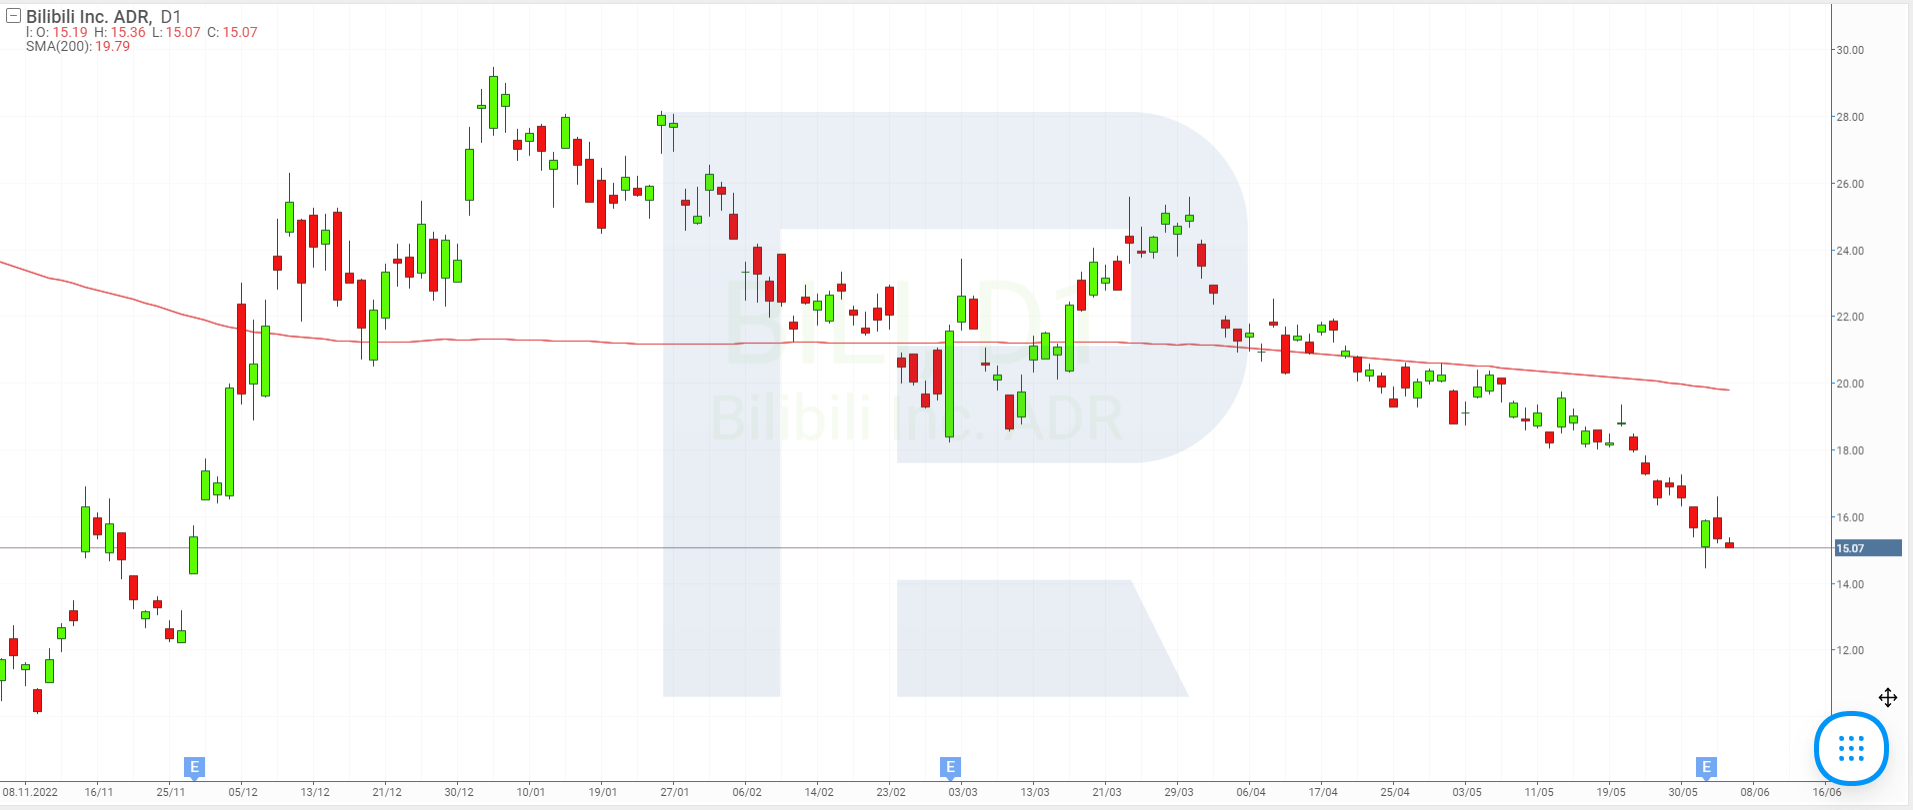 Stock price chart of Bilibili Inc.